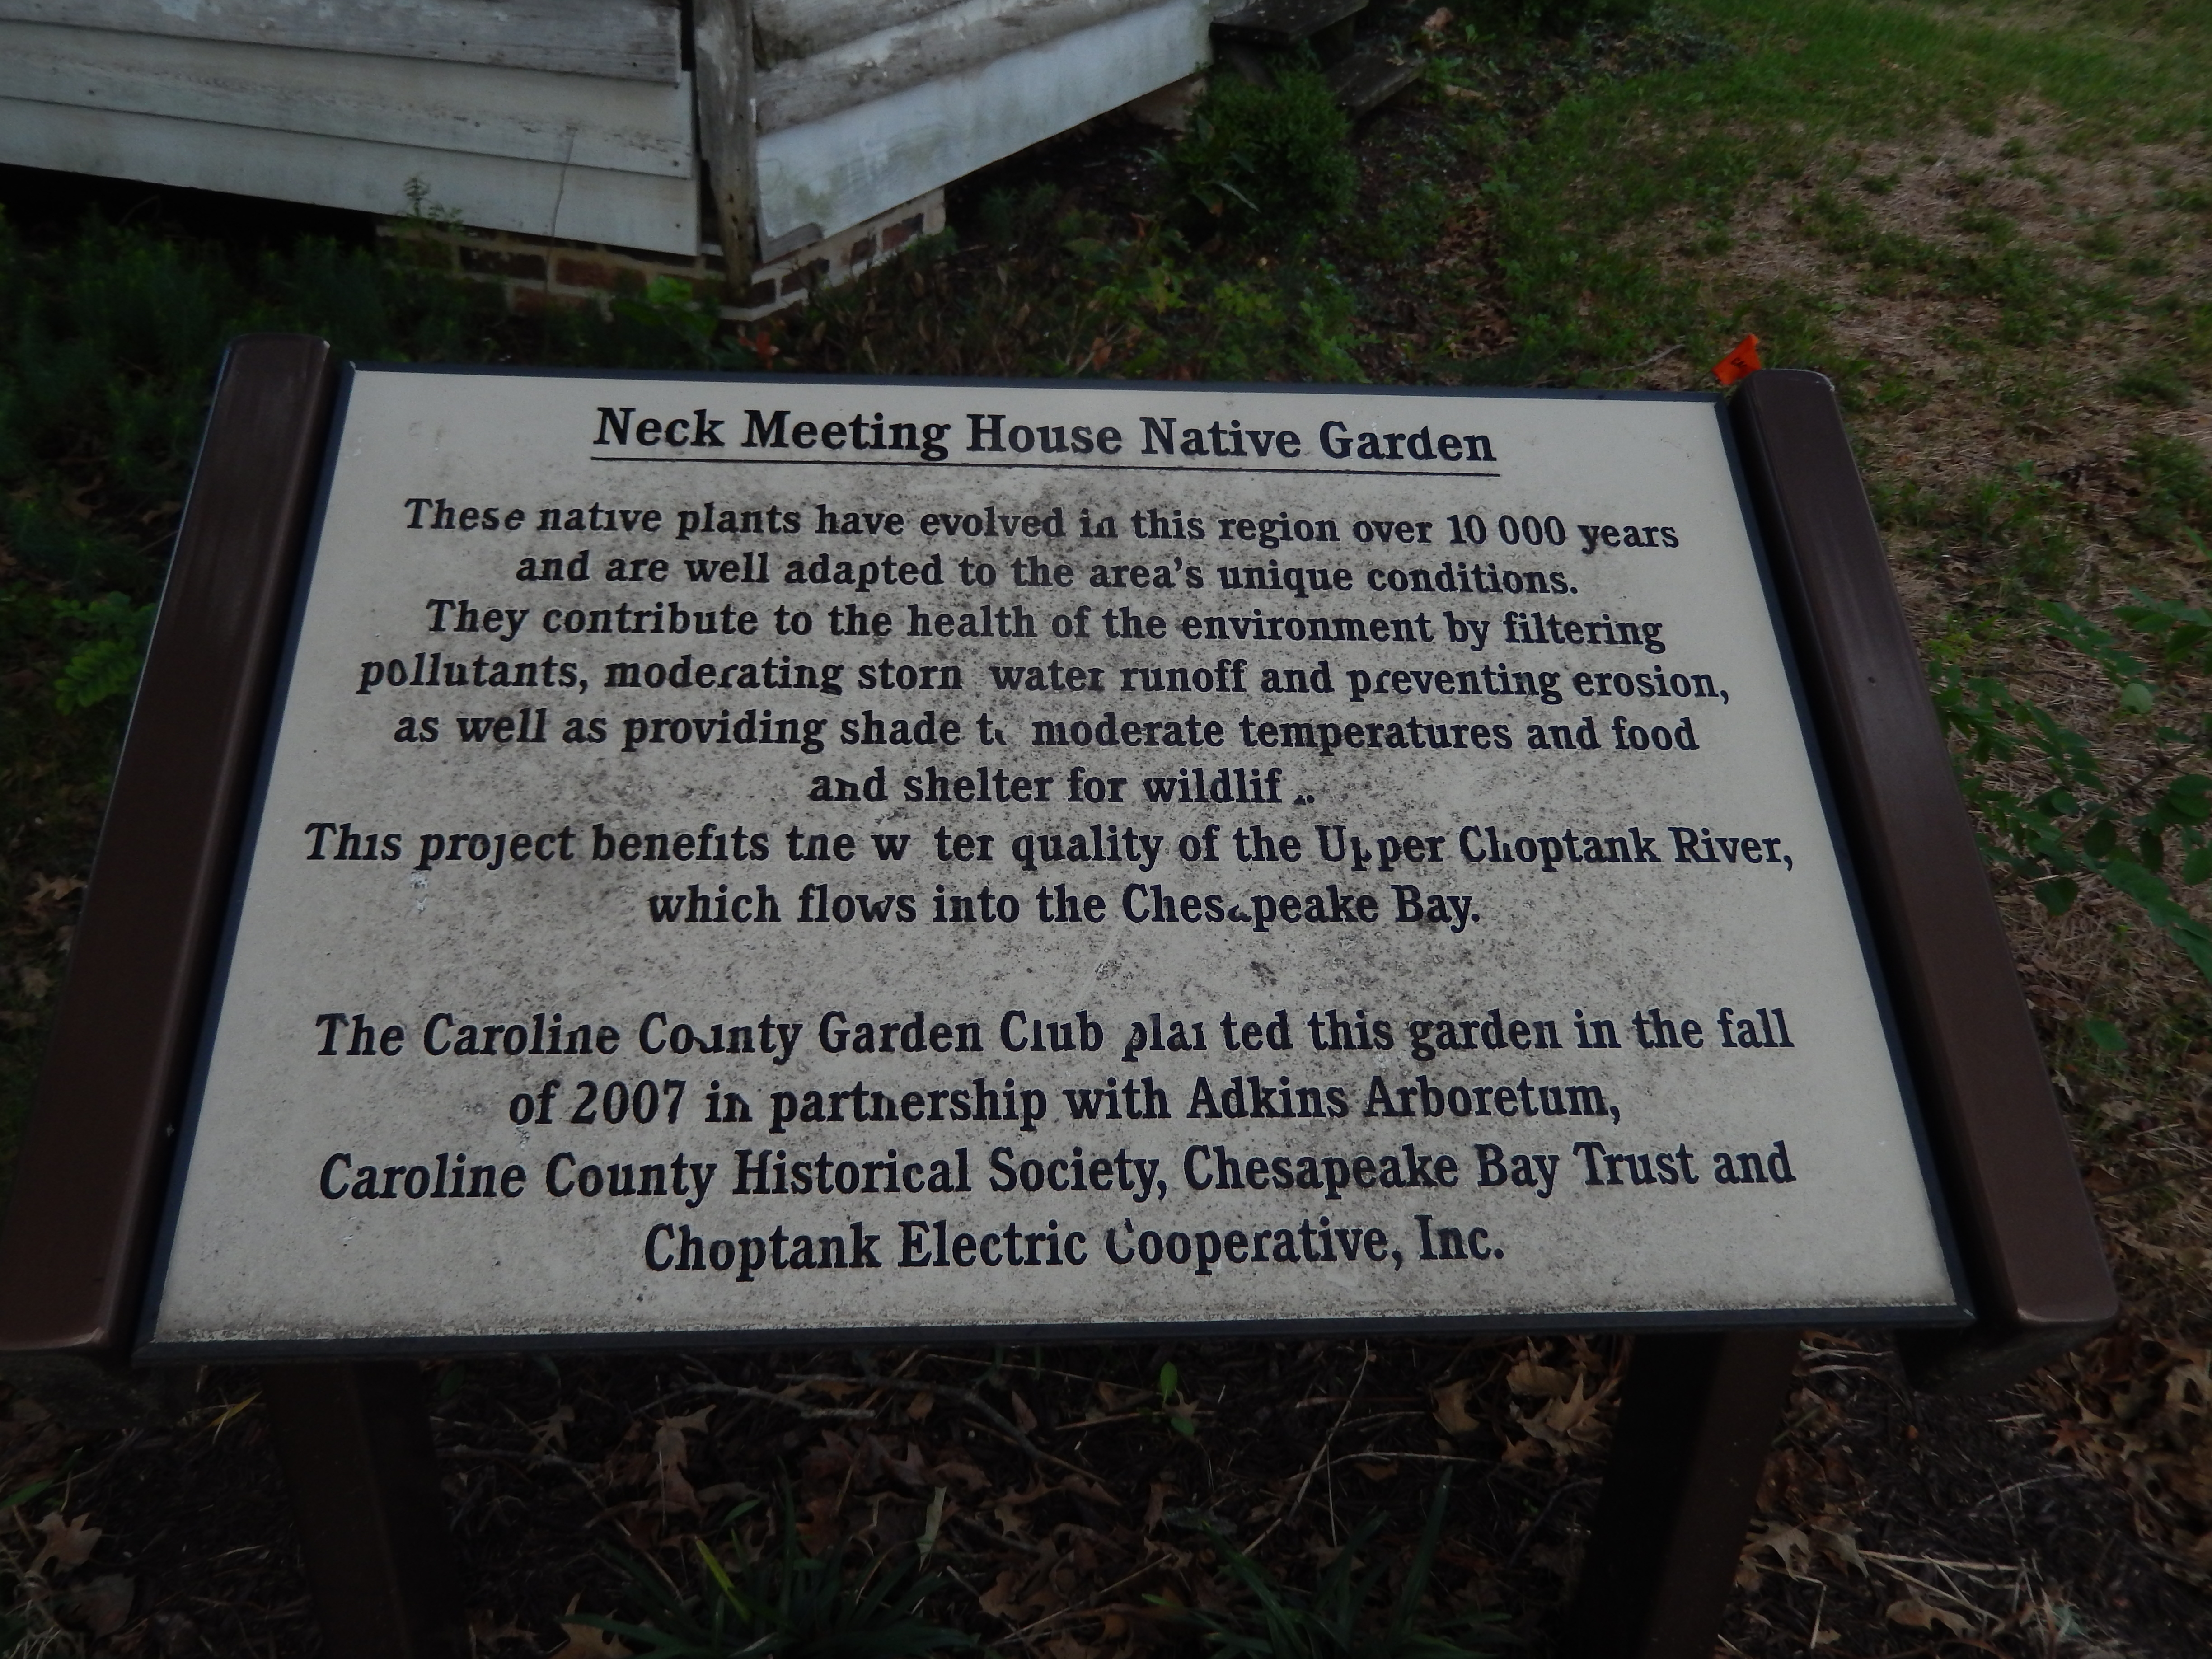 Neck Meeting House Native Garden Marker